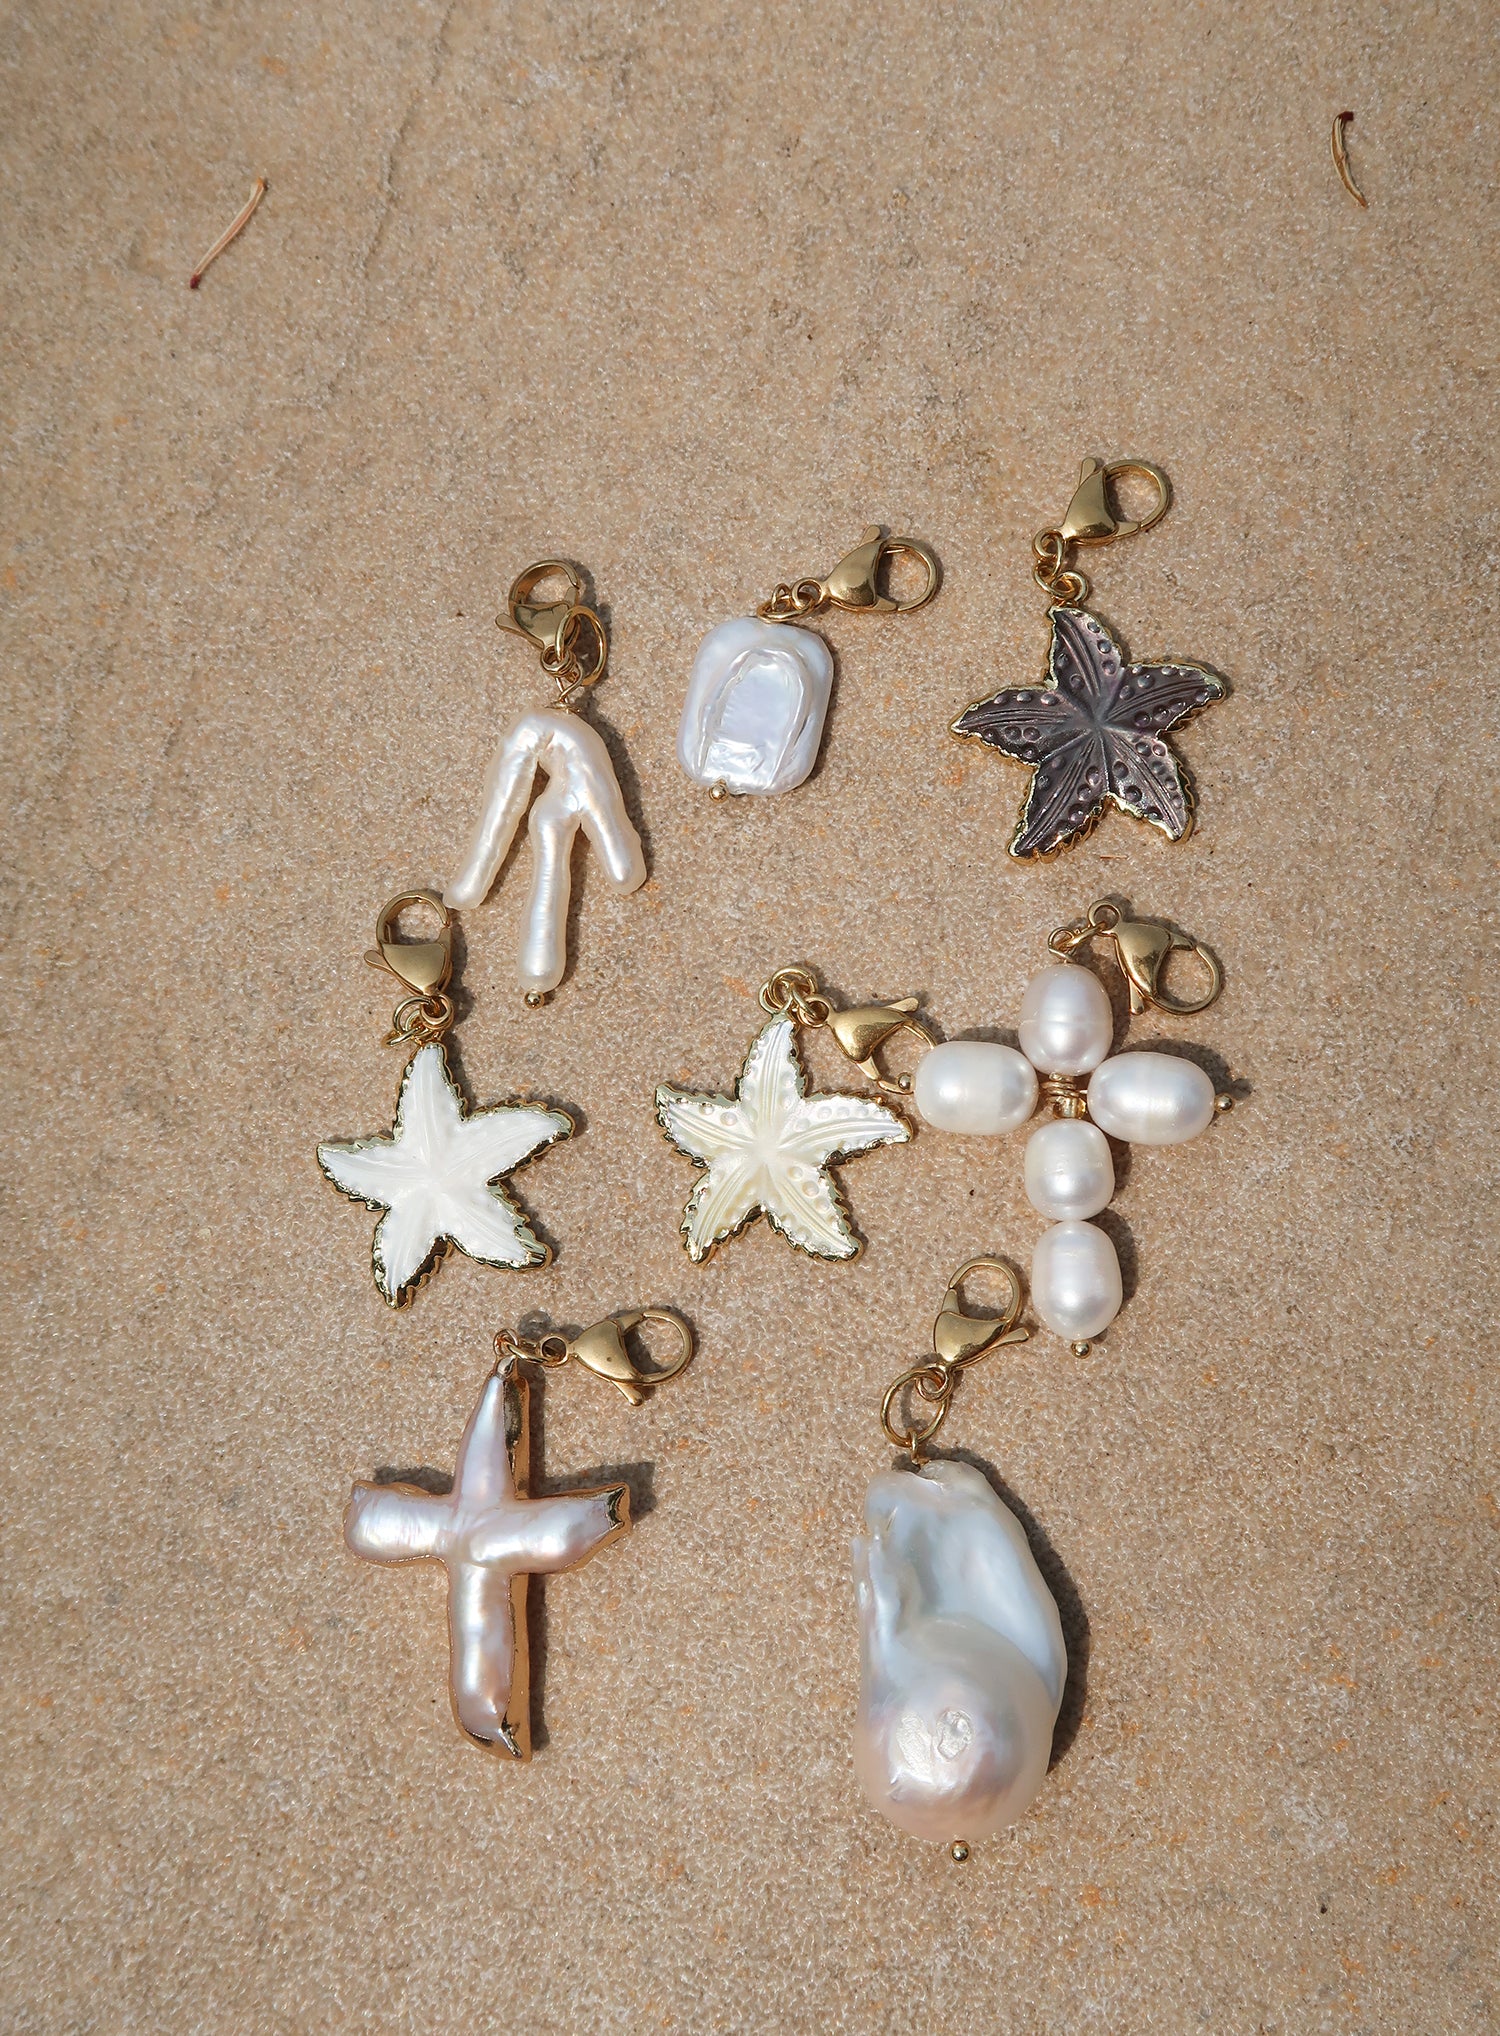 Cross pearl pendant